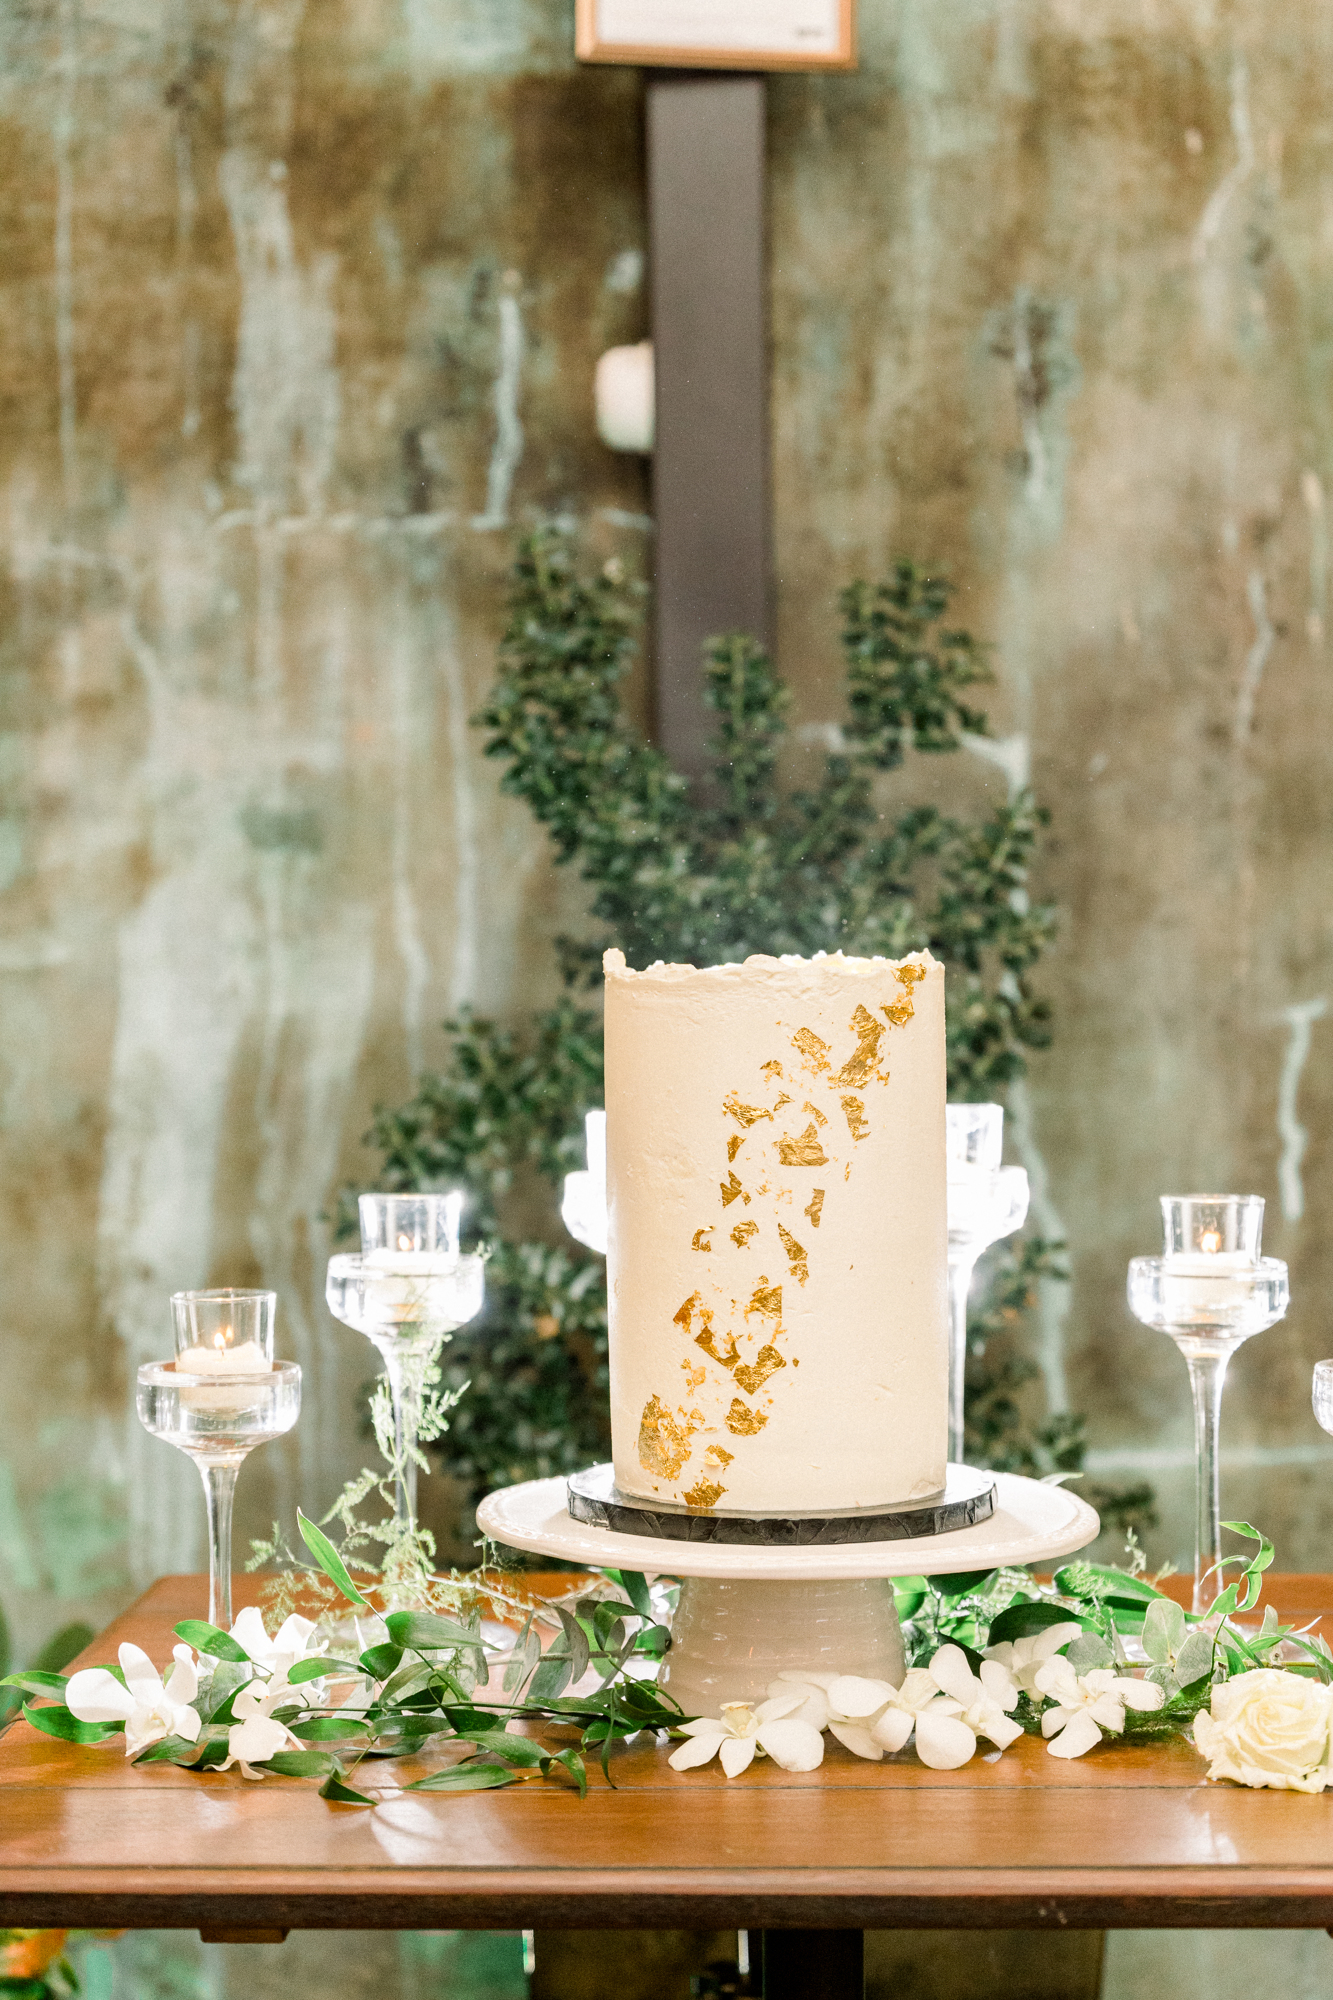 MyMoon wedding reception layout with cake